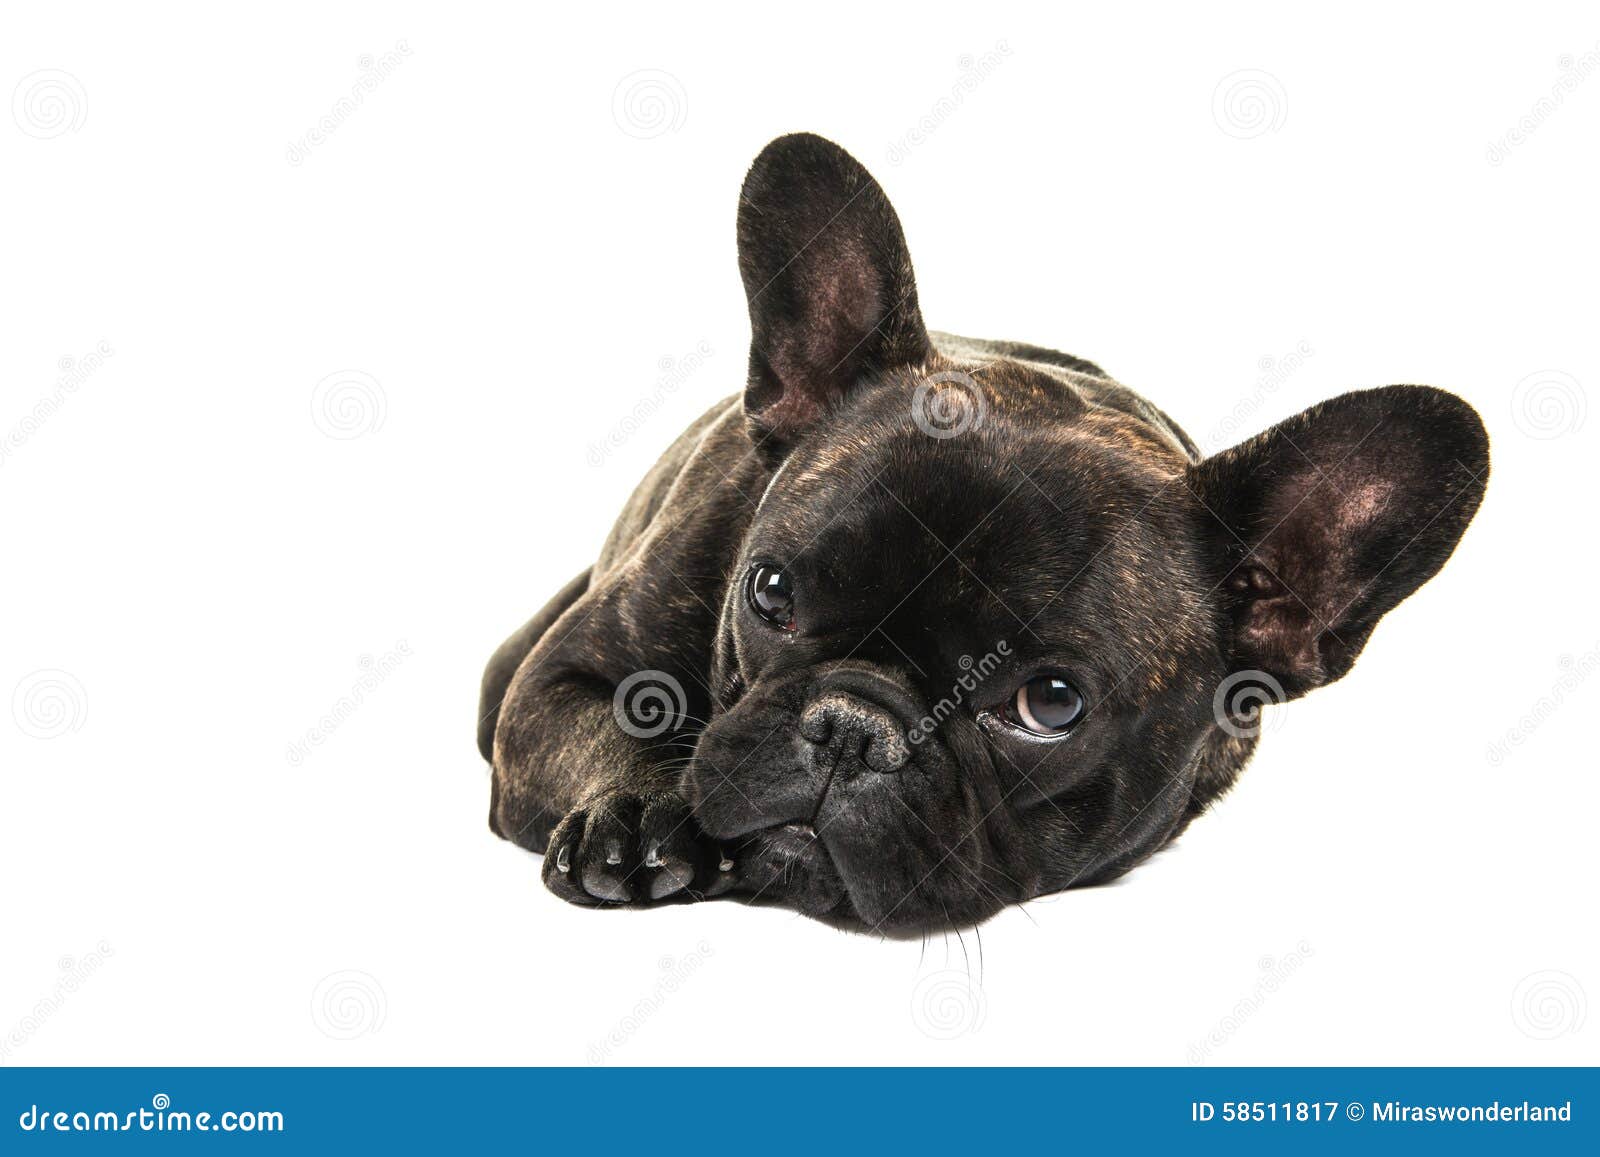 Cute French Bulldog Lying Down Stock Image Image of